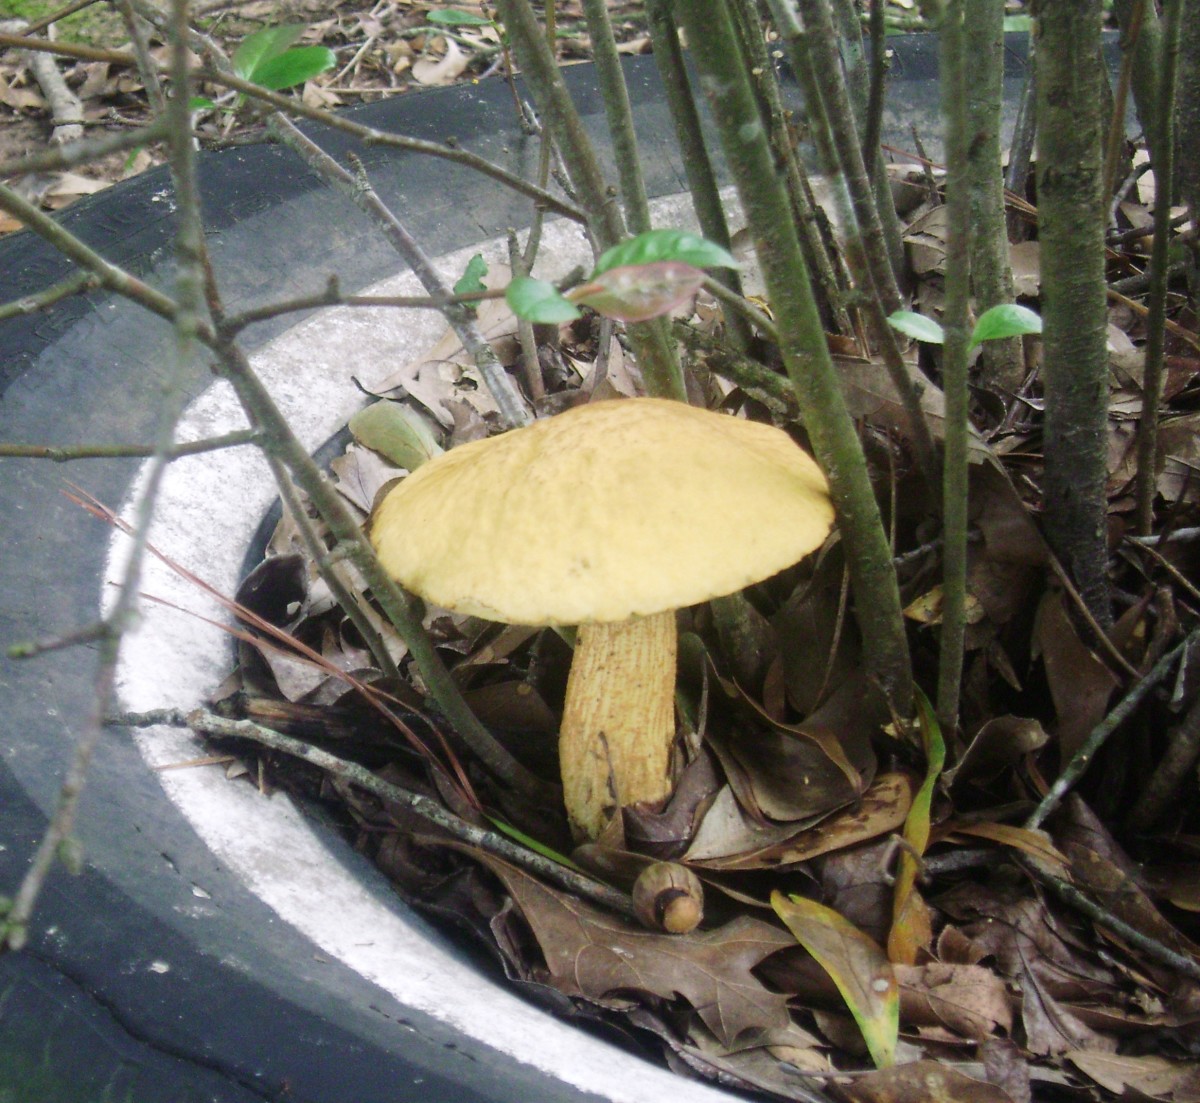 The yellow mushroom (toadstool?)in the tire.